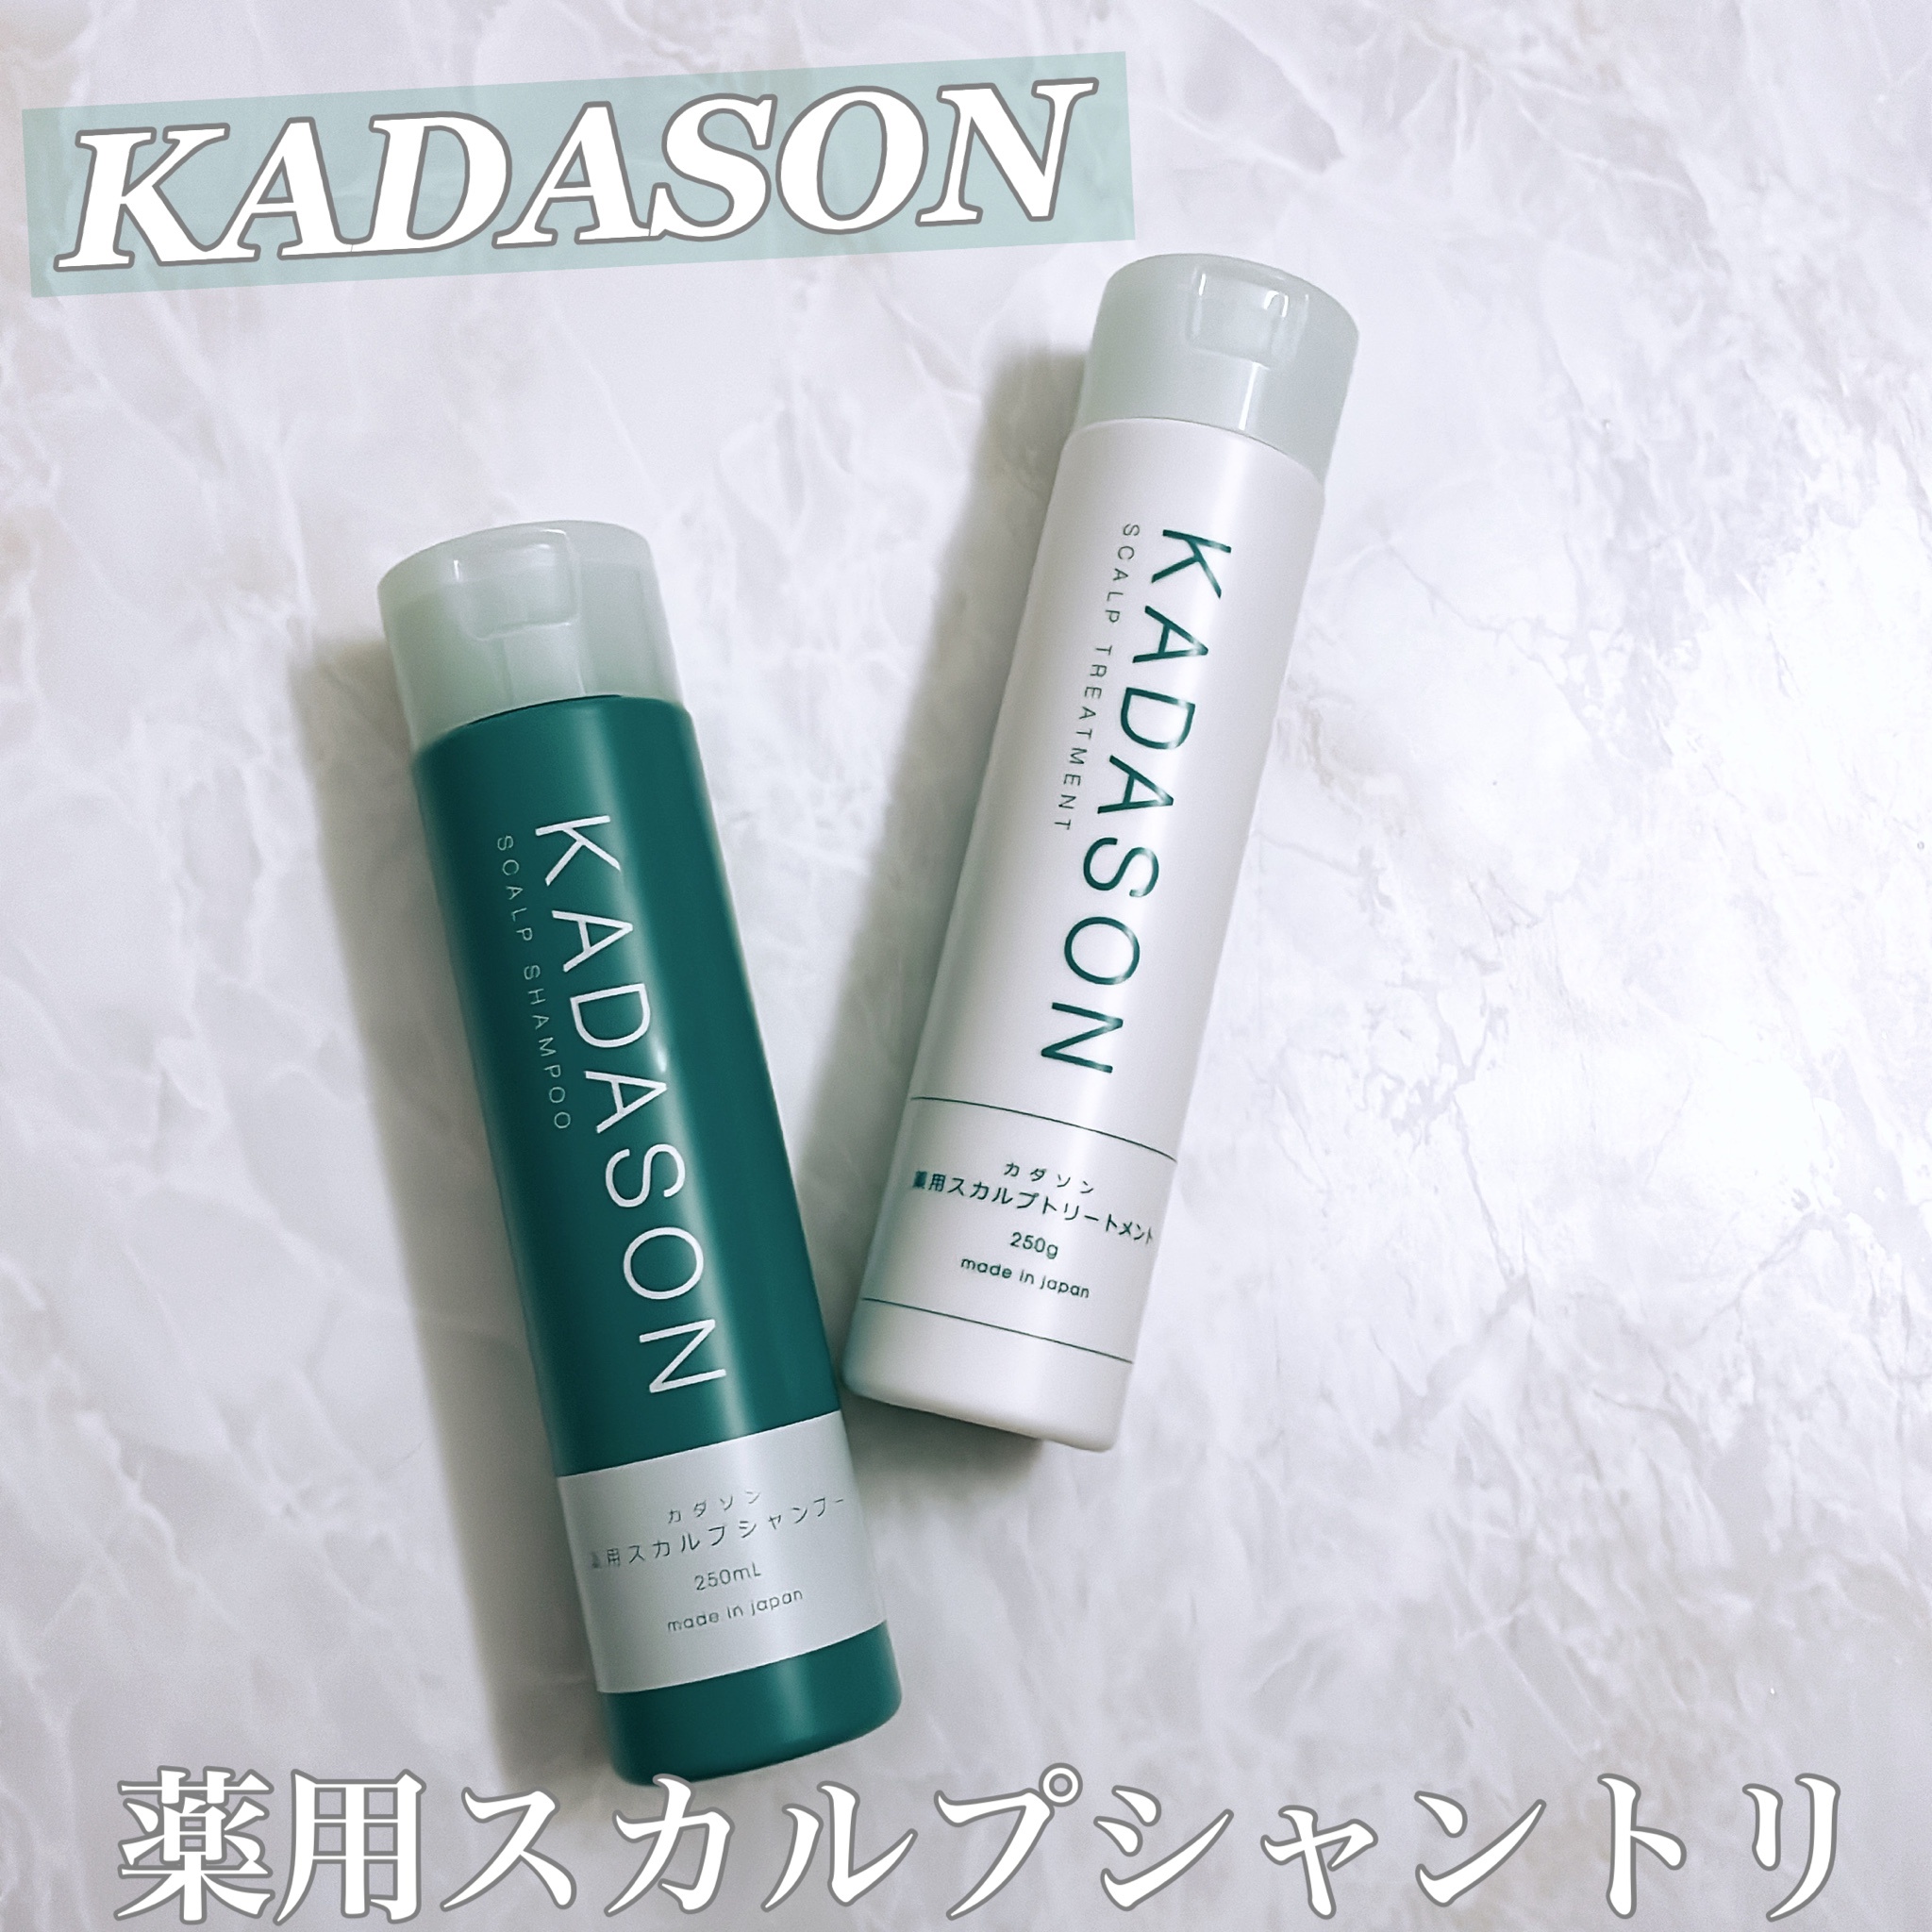 KADASON (カダソン) / カダソン 薬用スカルプシャンプー 